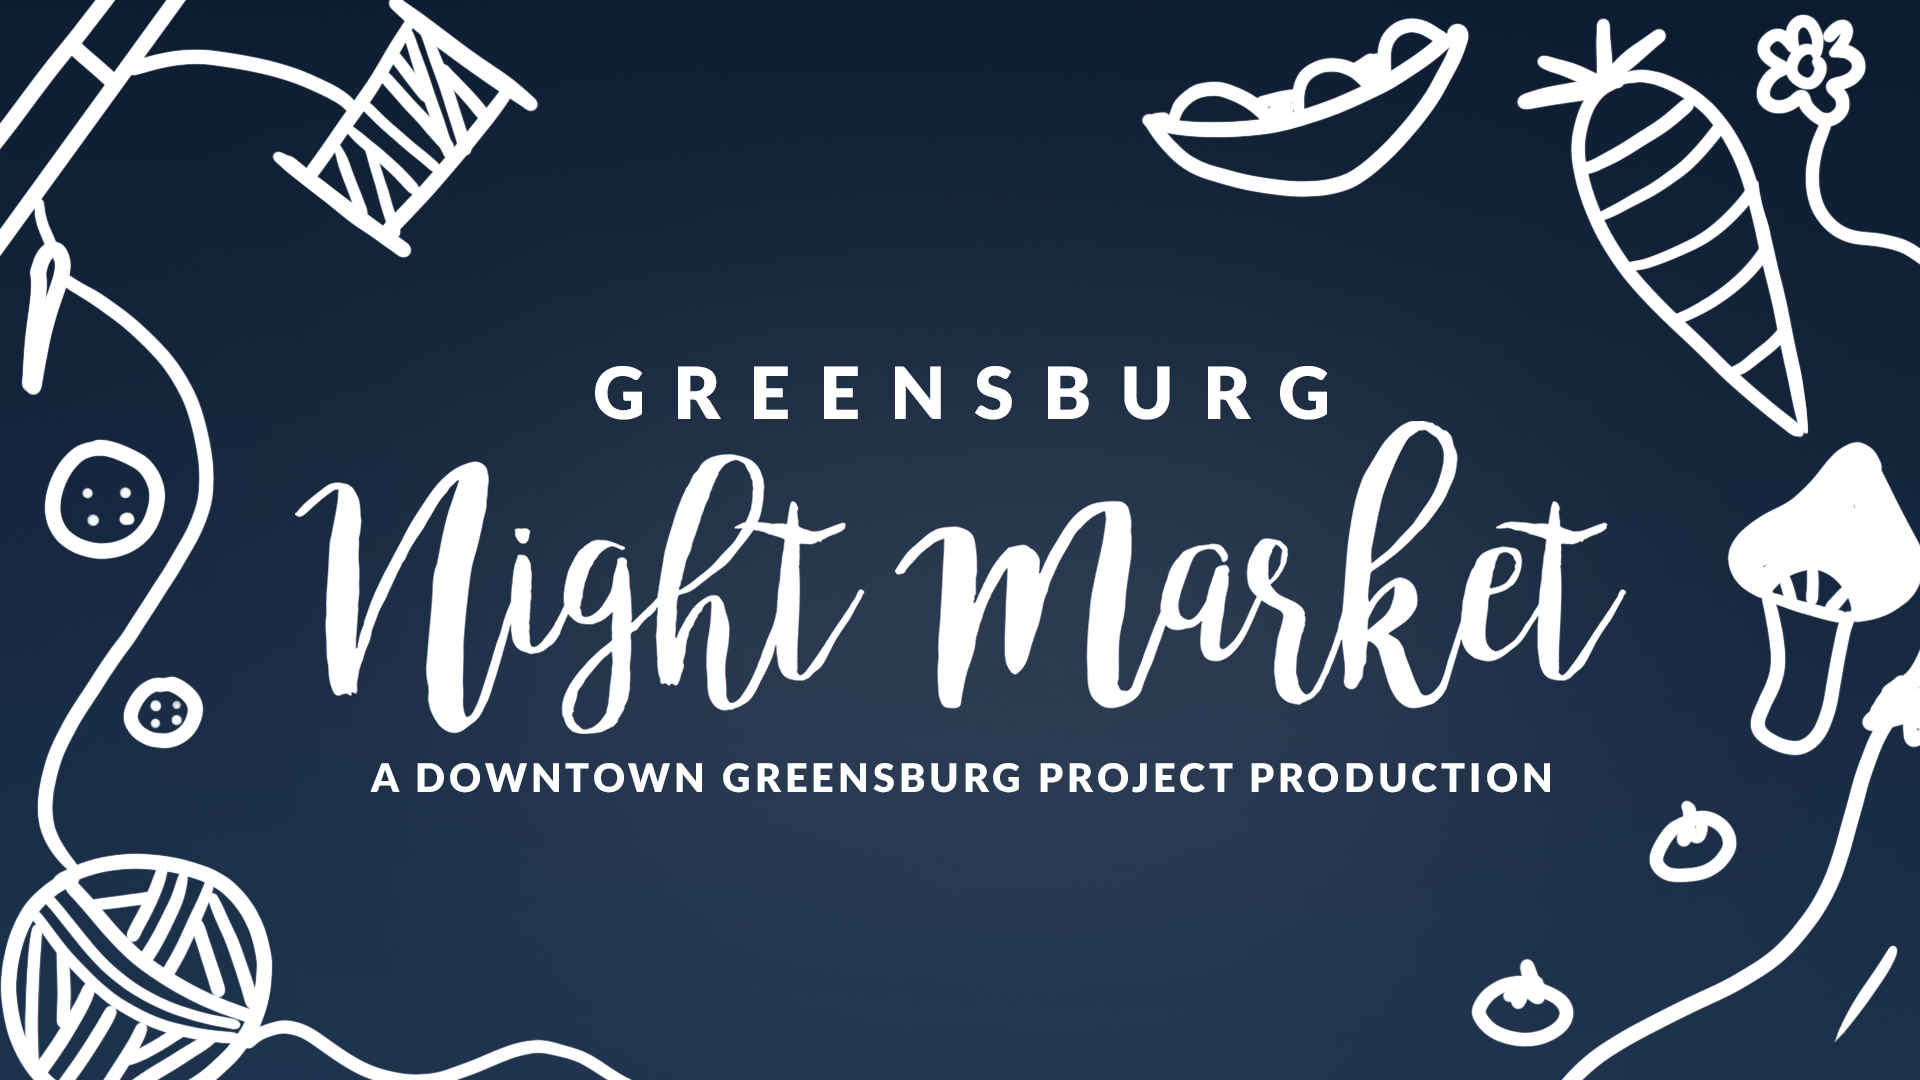 Greensburg Night Market begins Thursday Downtown Greensburg Project